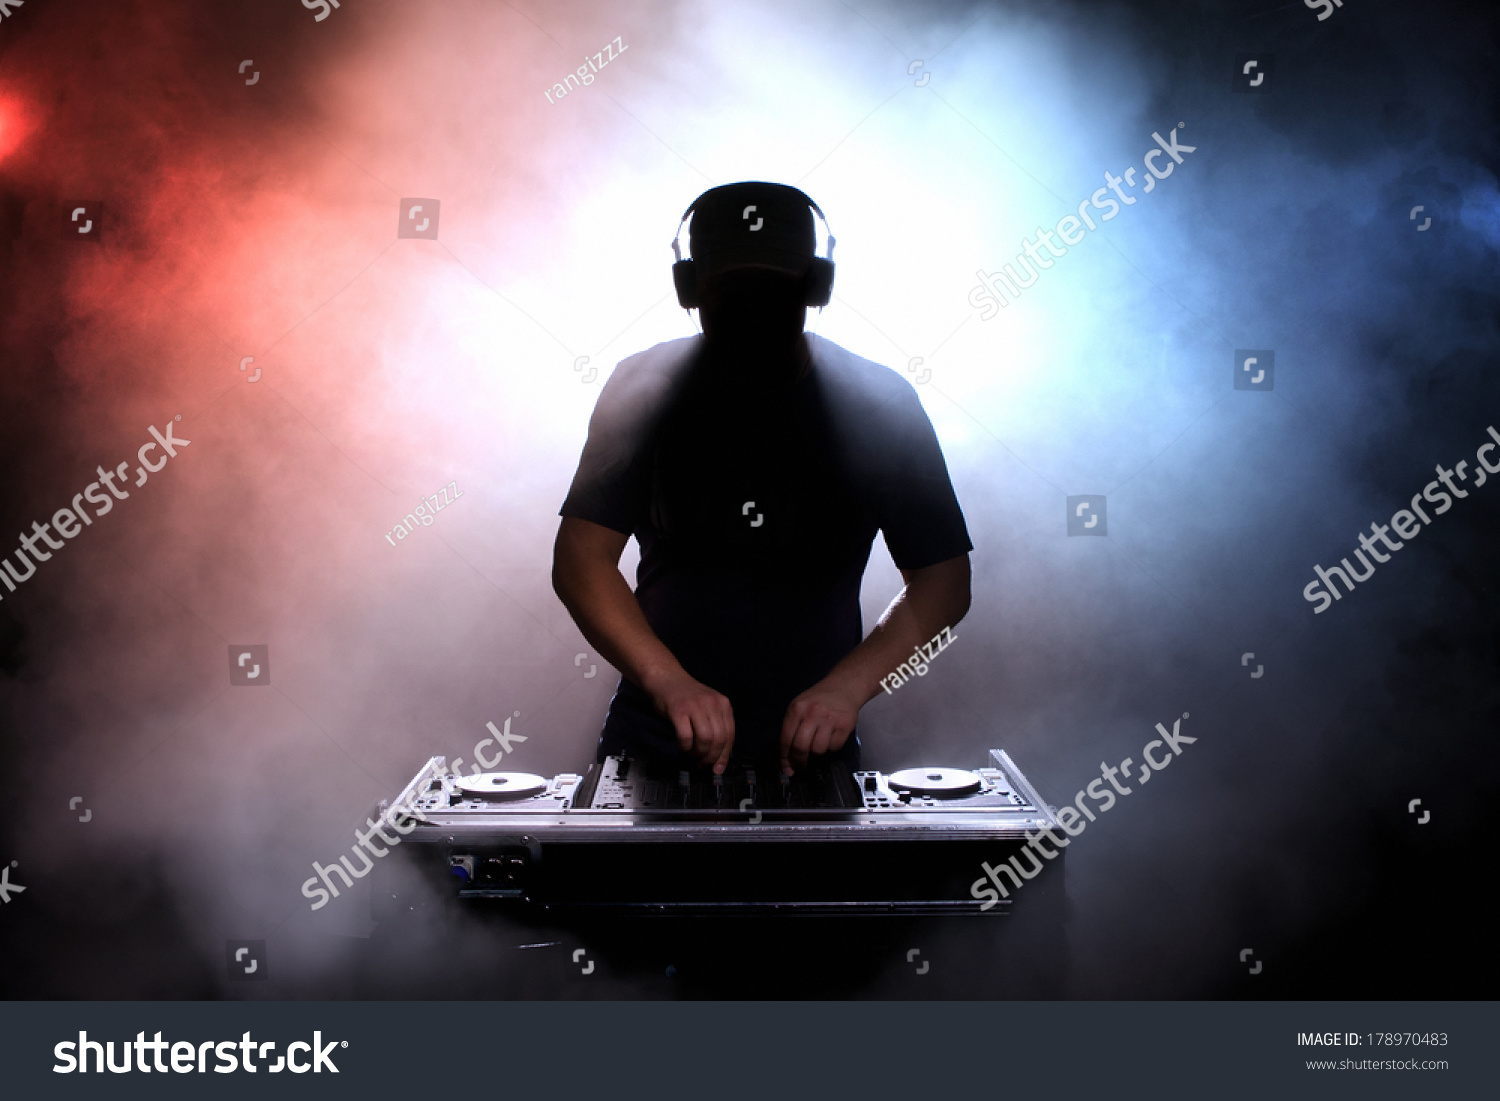 Disc jokey, DJ, silhouette over foggy illuminated background #178970483